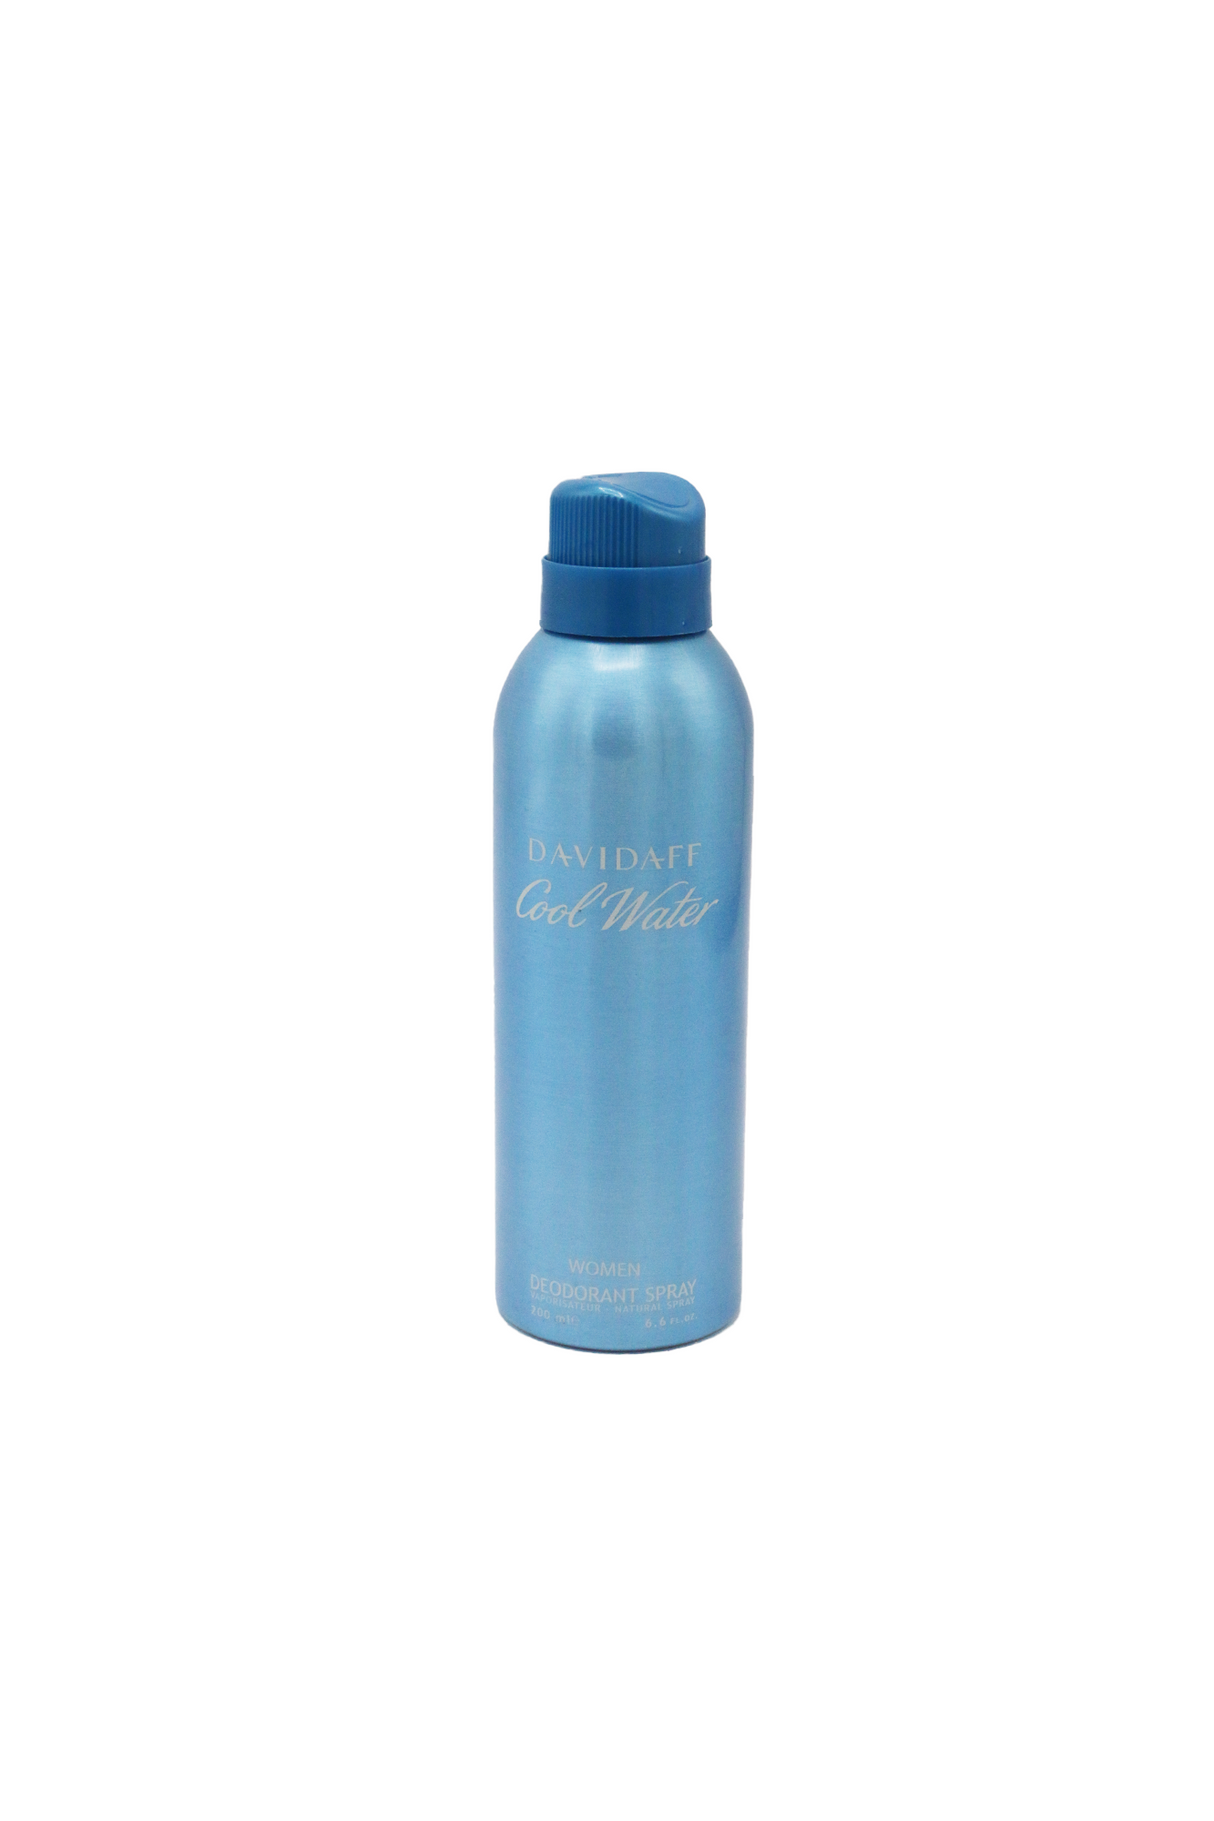 davidoff cool water deodorant body spray 200ml for women